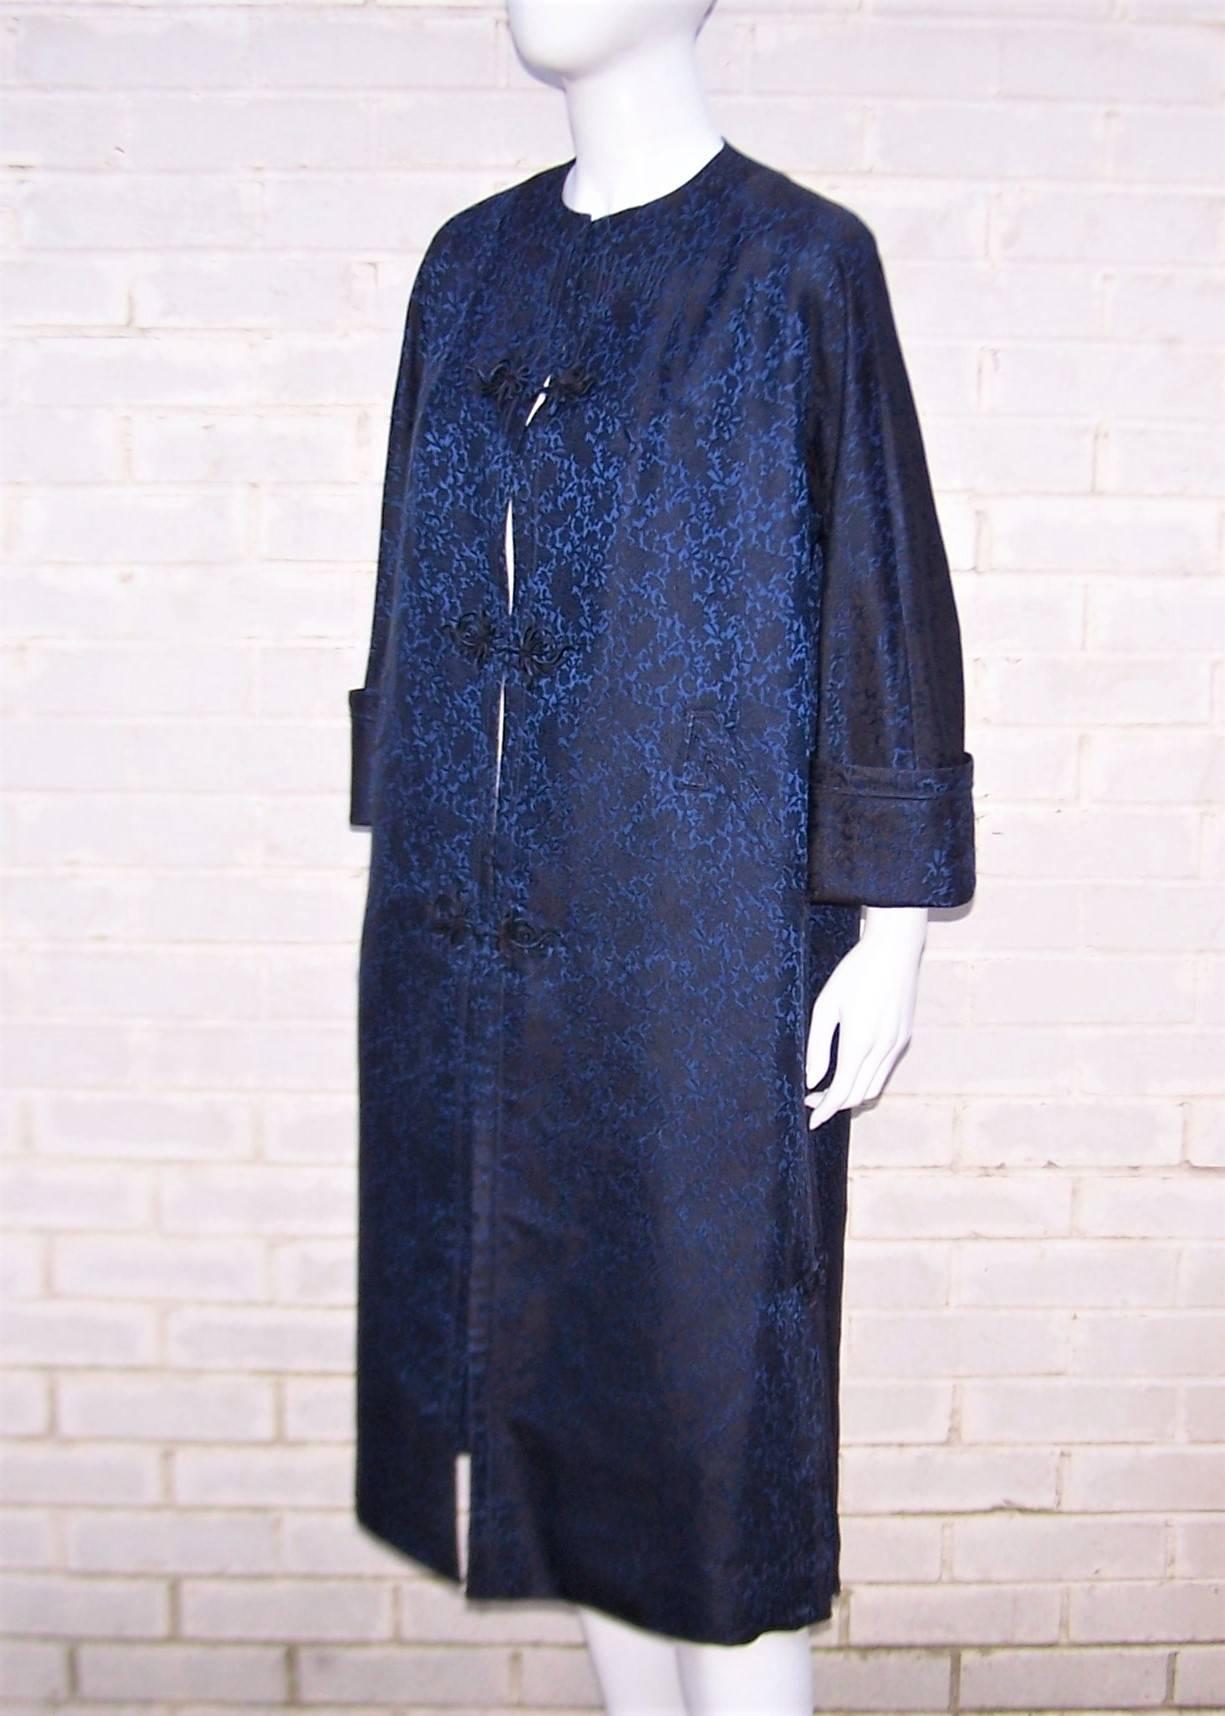 C.1950 Mandarin Style Black & Blue Jacquard Evening Coat 1